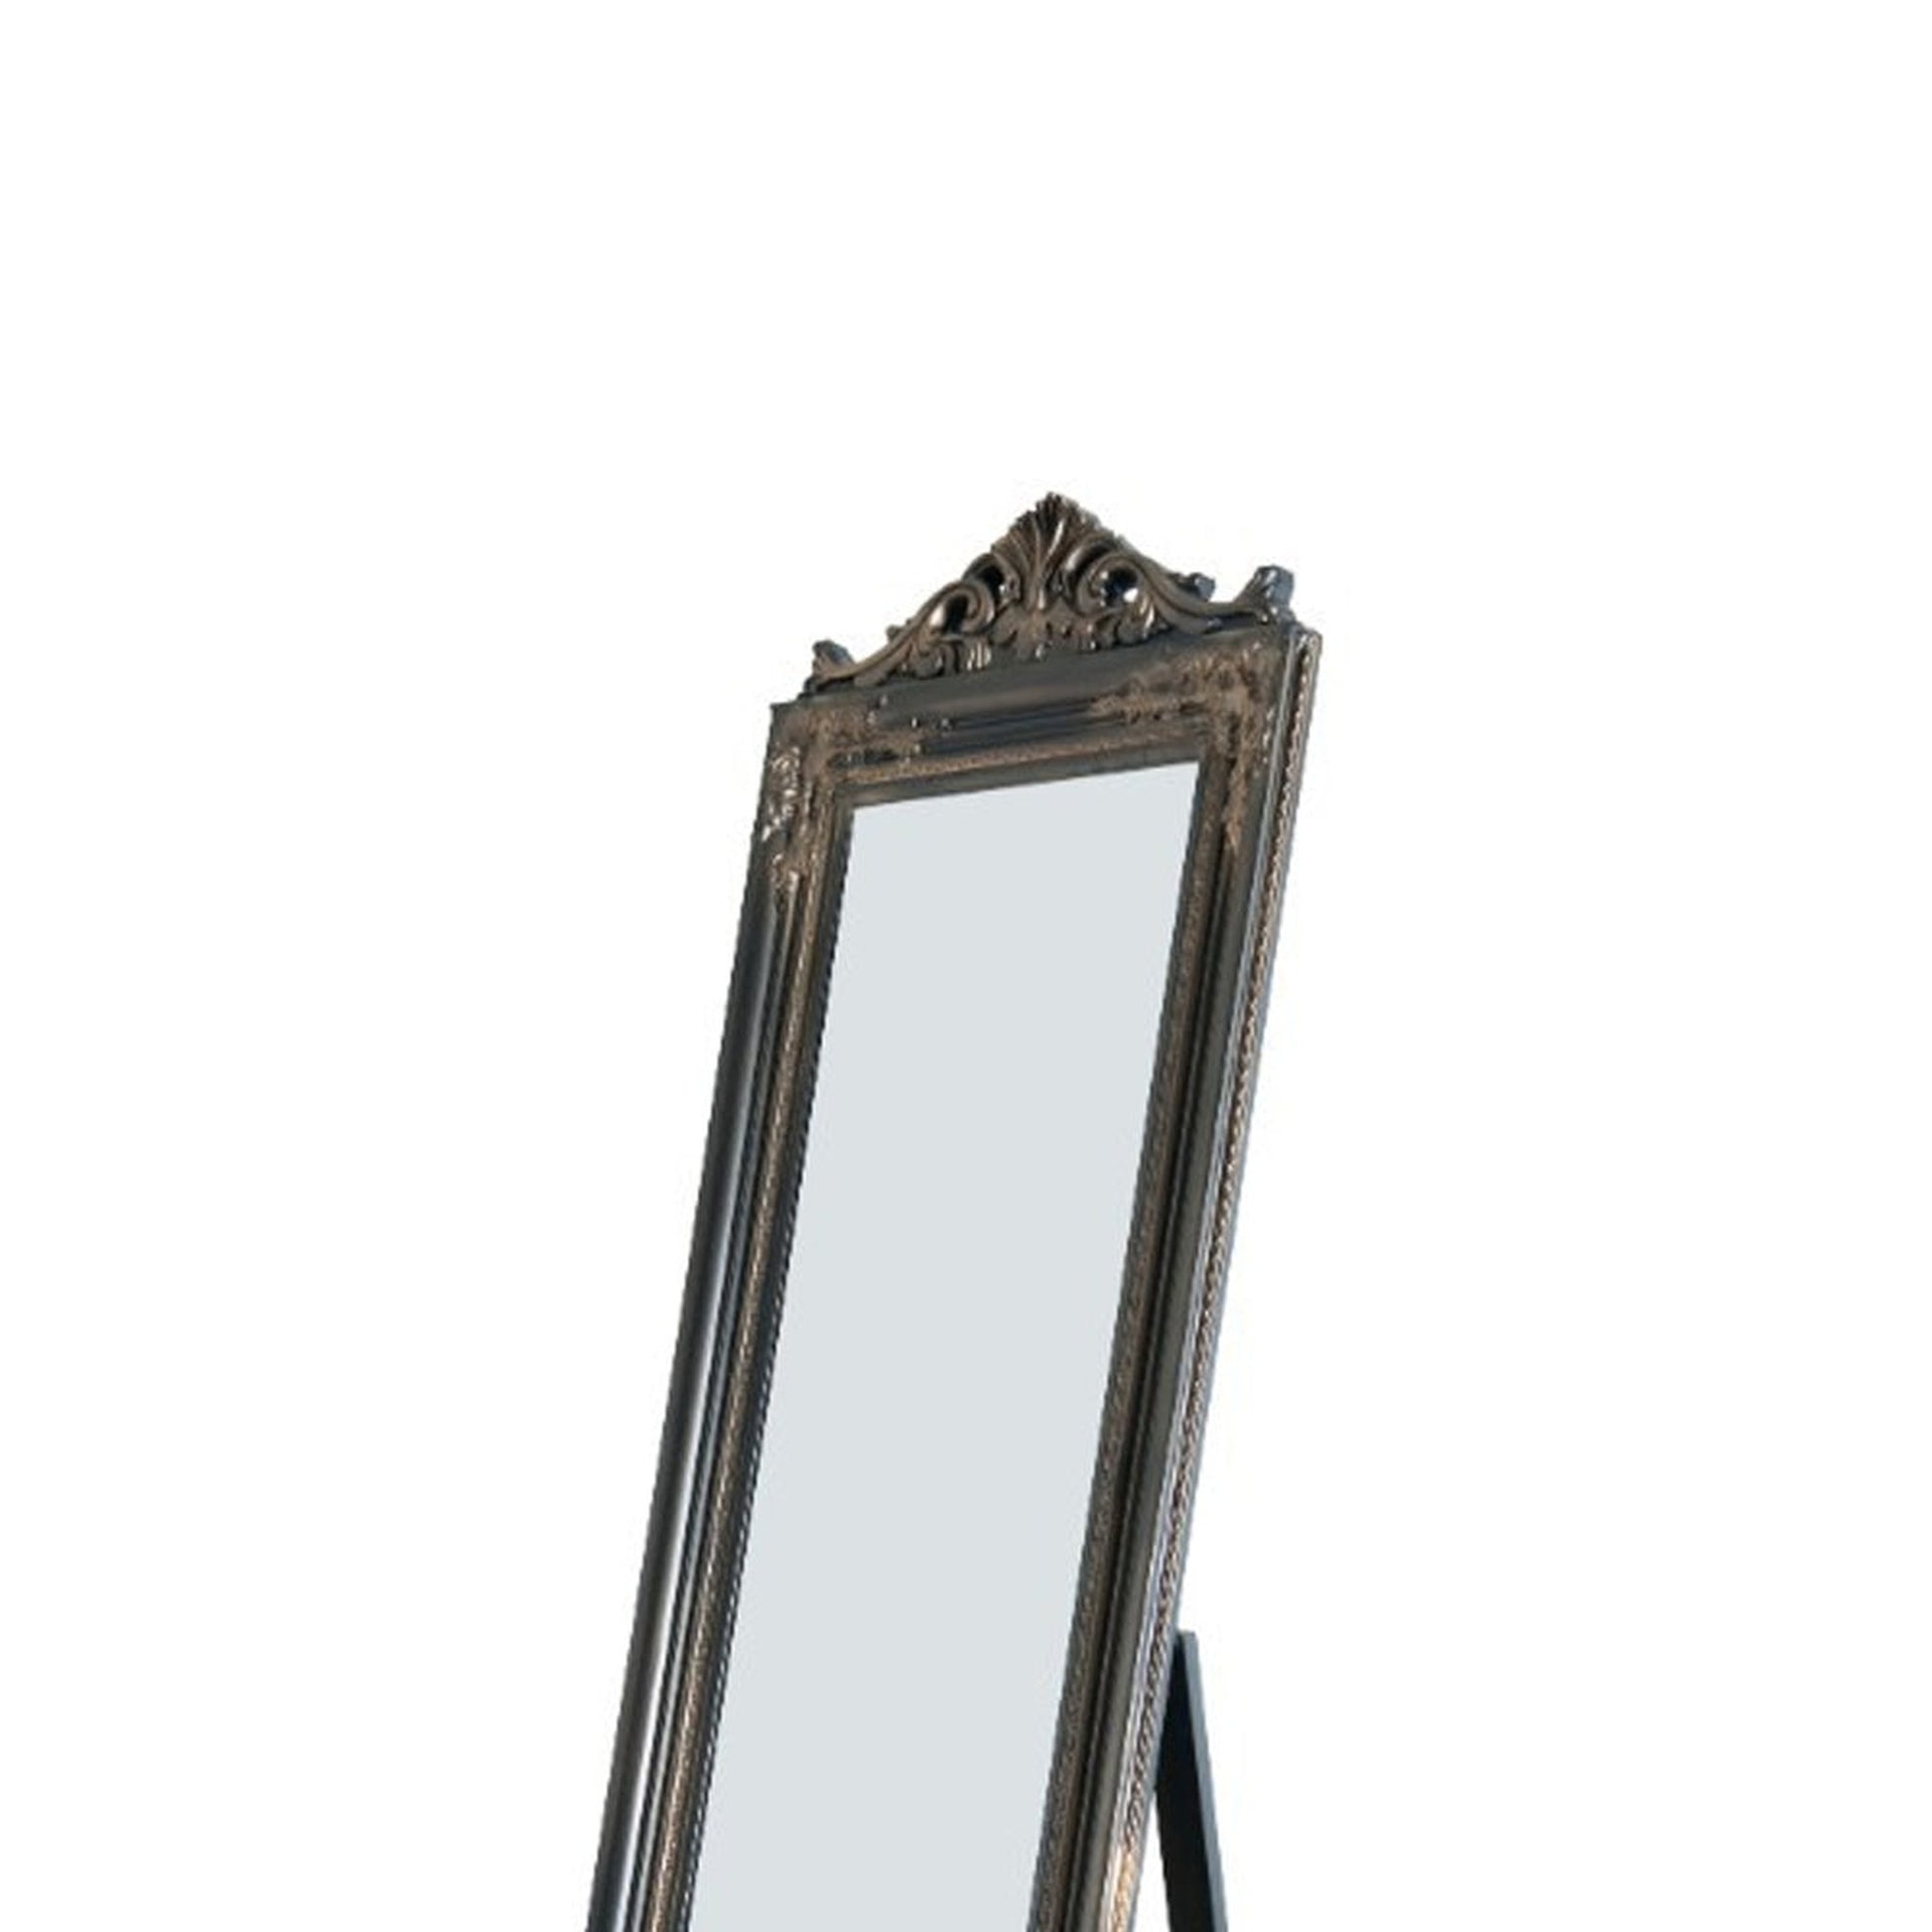 Benzara Camilla 71" Copper Full Length Standing Mirror With Decorative Design